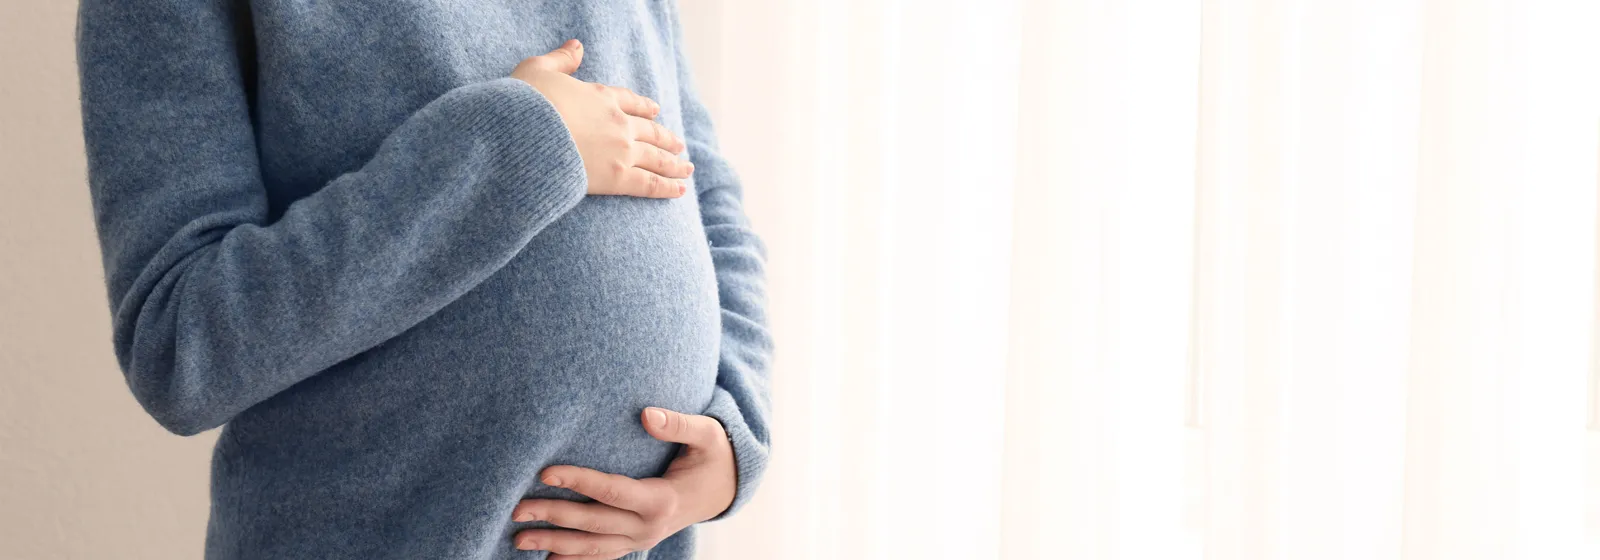 FACING AN UNPLANNED PREGNANCY?